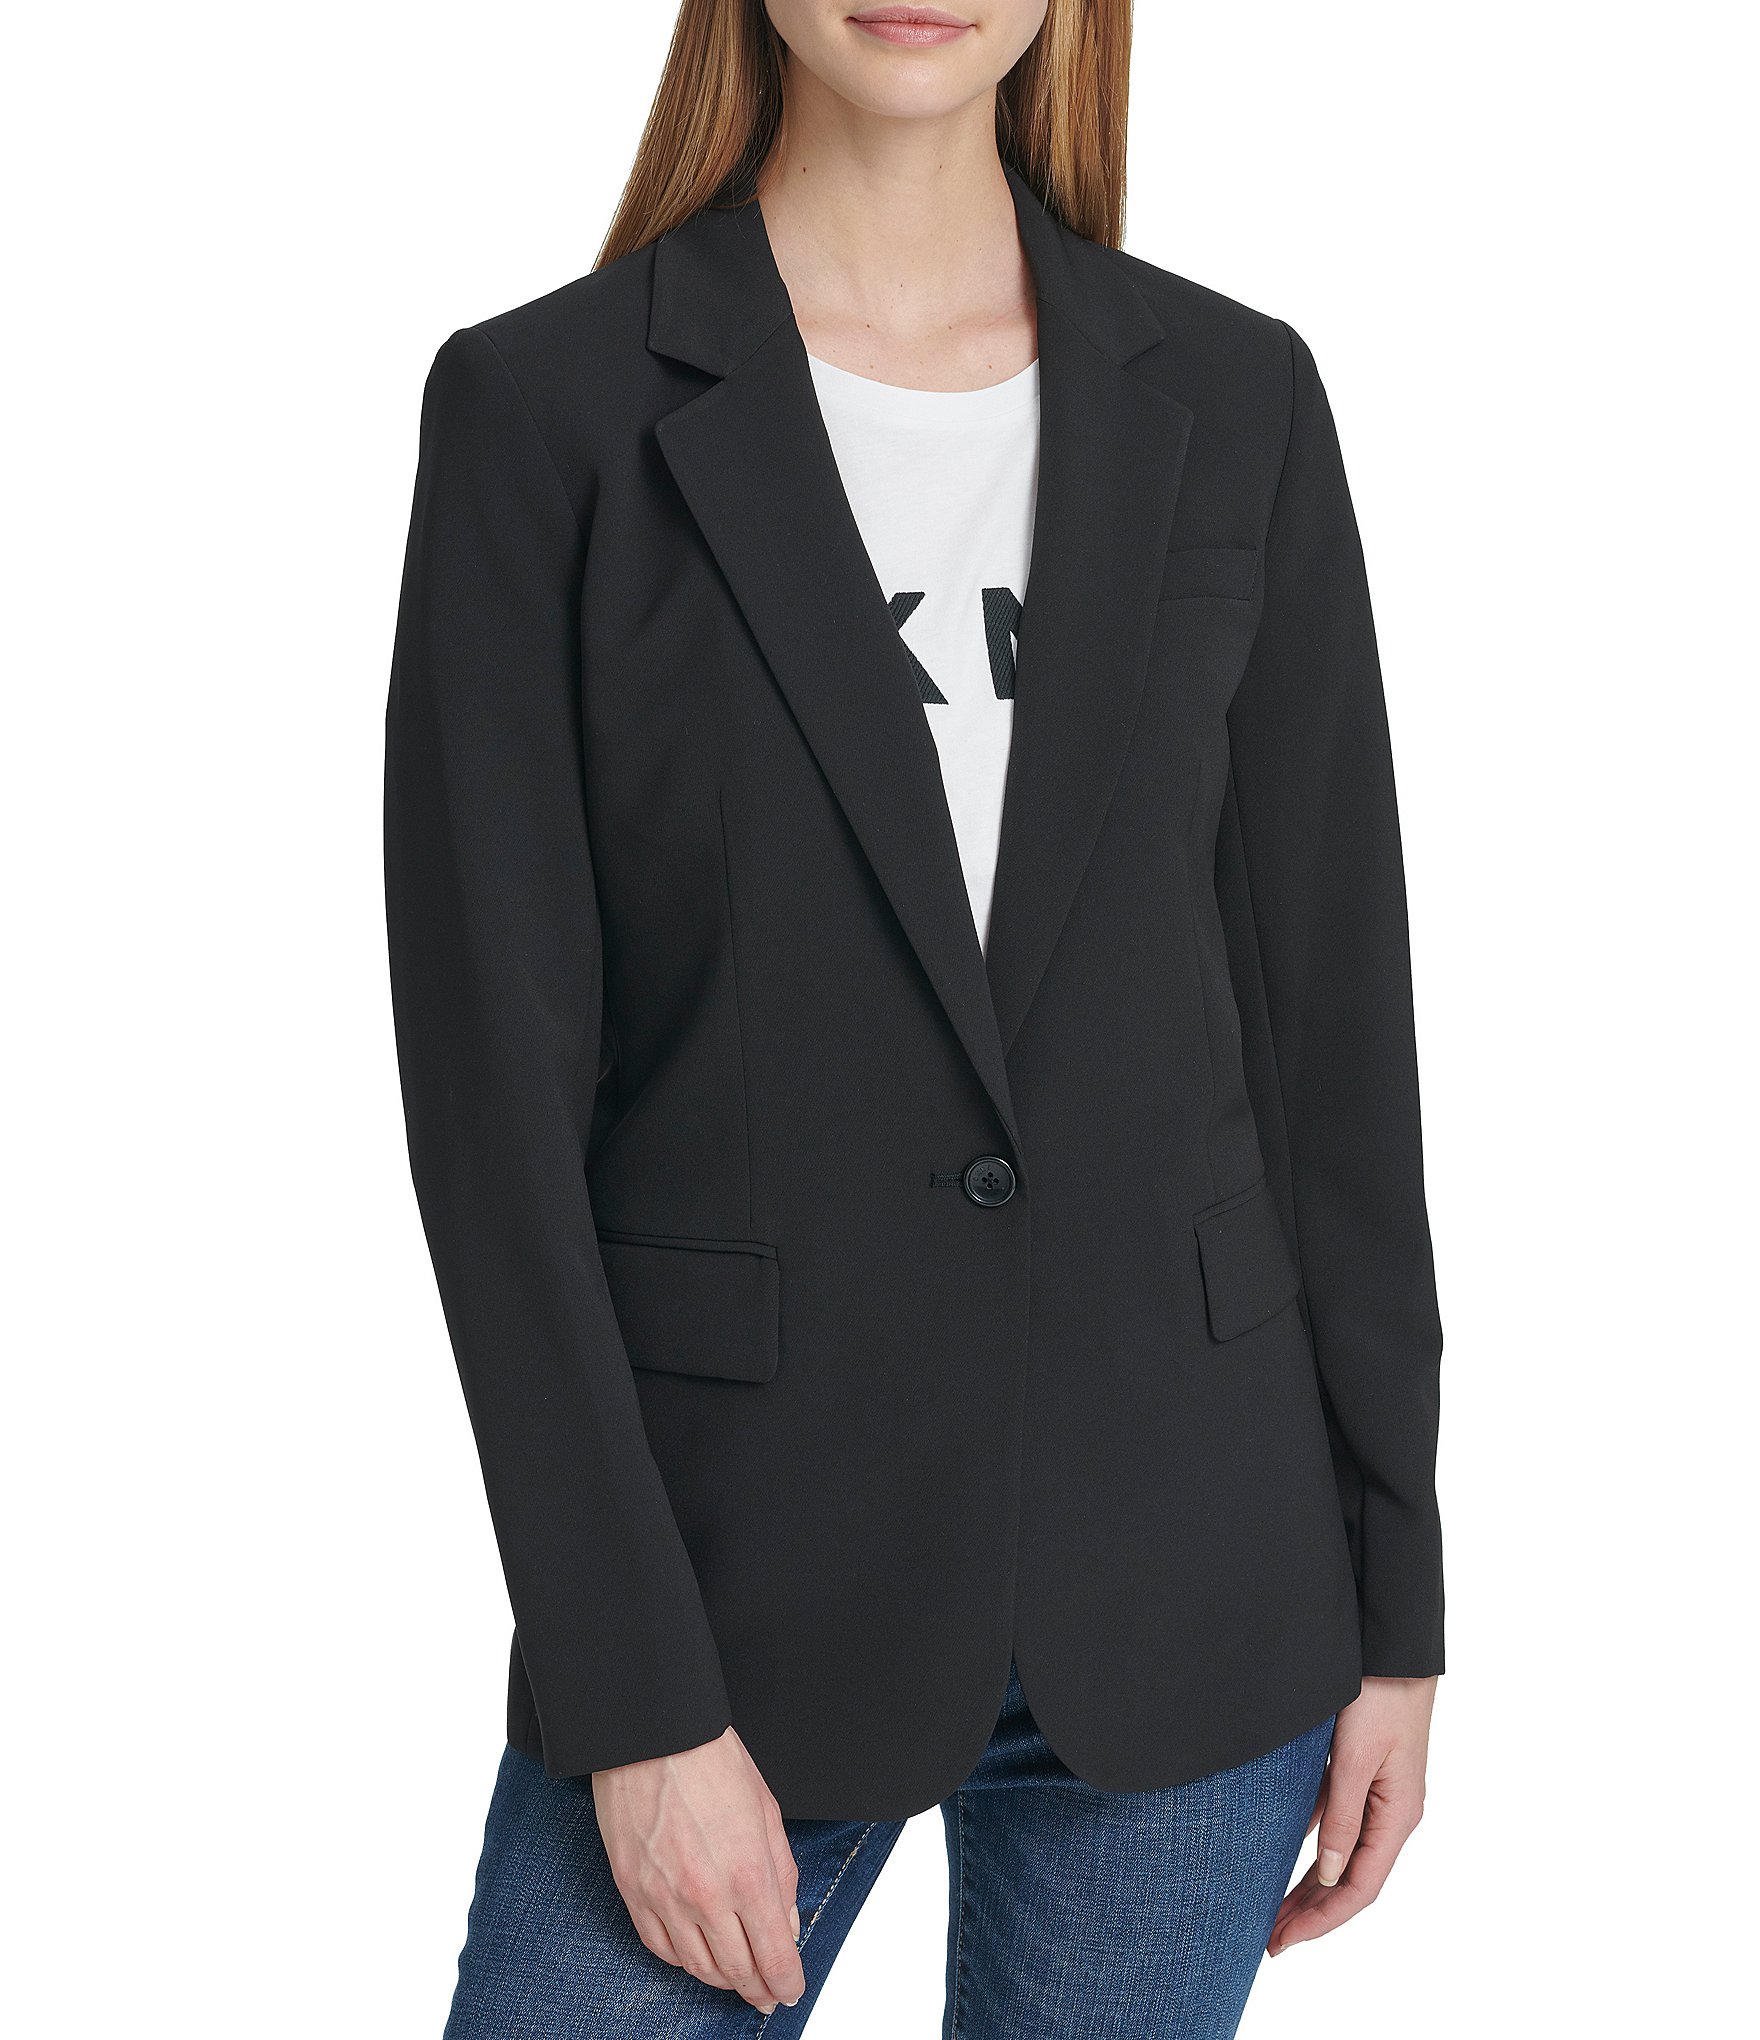 Blazer jacket black | Trendy Jackets & Fashionable Blazers - Lush Fashion  Lounge